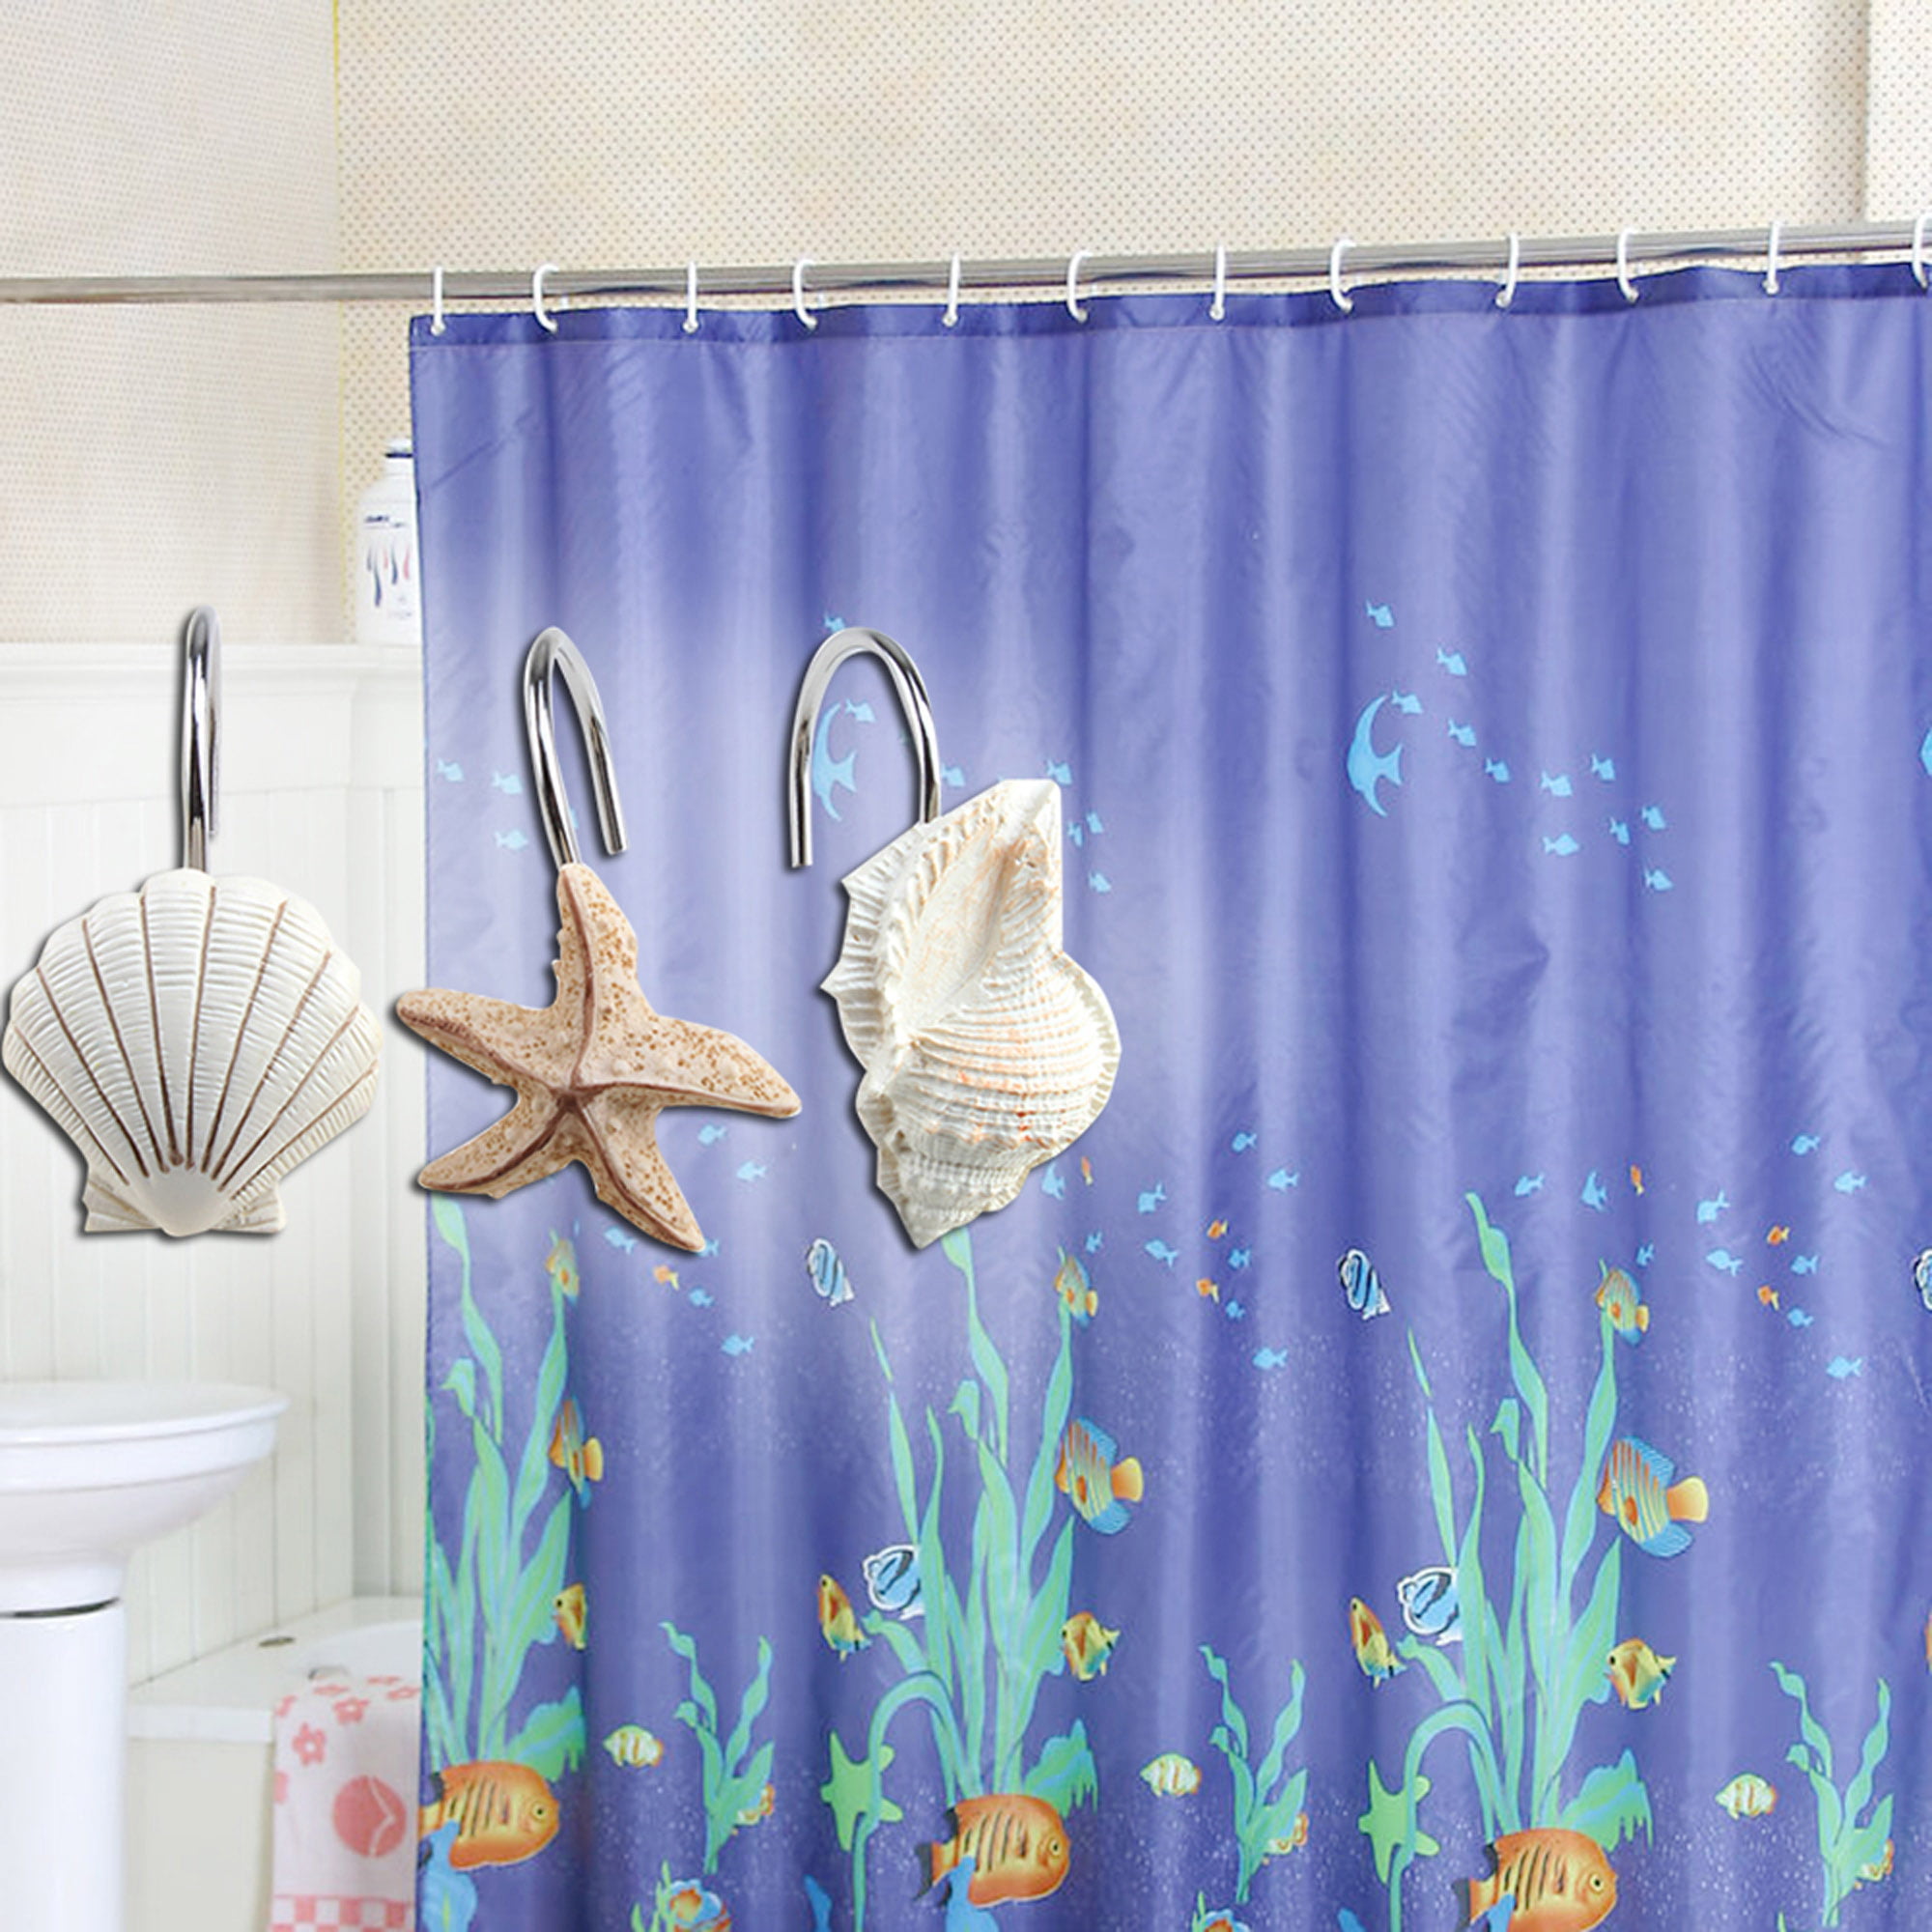 12PCS/Set Shell Sea Star Shower Curtain Hooks Bathroom Curtain Rings Hangers 